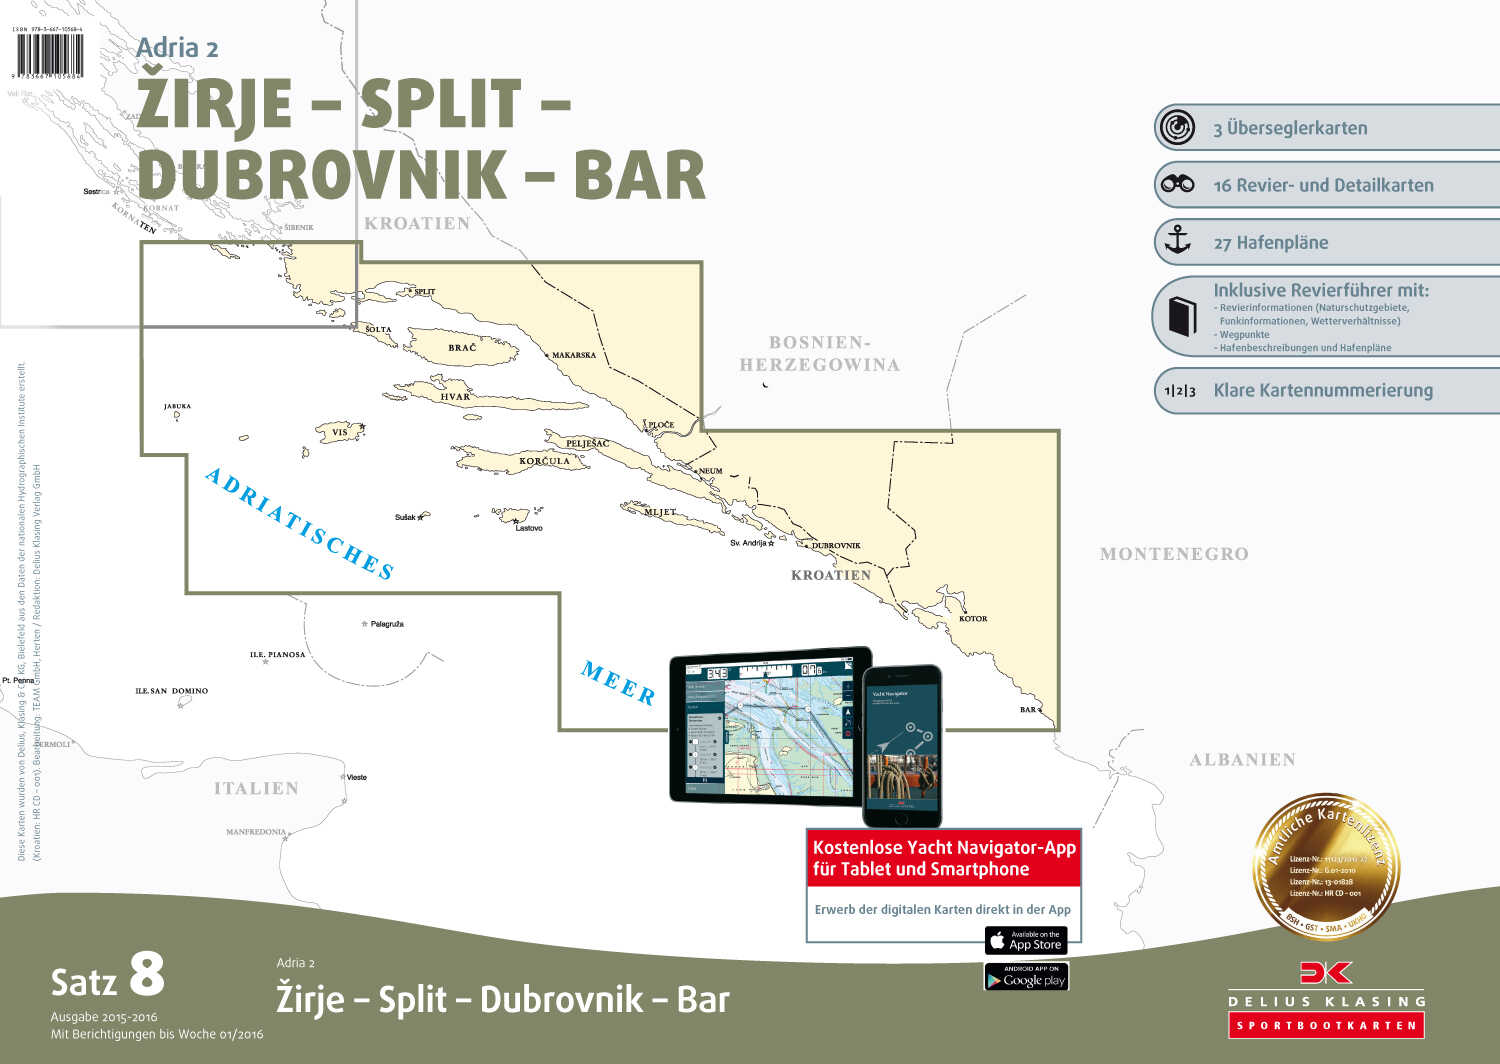 Delius Klasing Sportbootkarten Satz 8: Adria 02. Zirje - Split - Dubrovnik - Bar